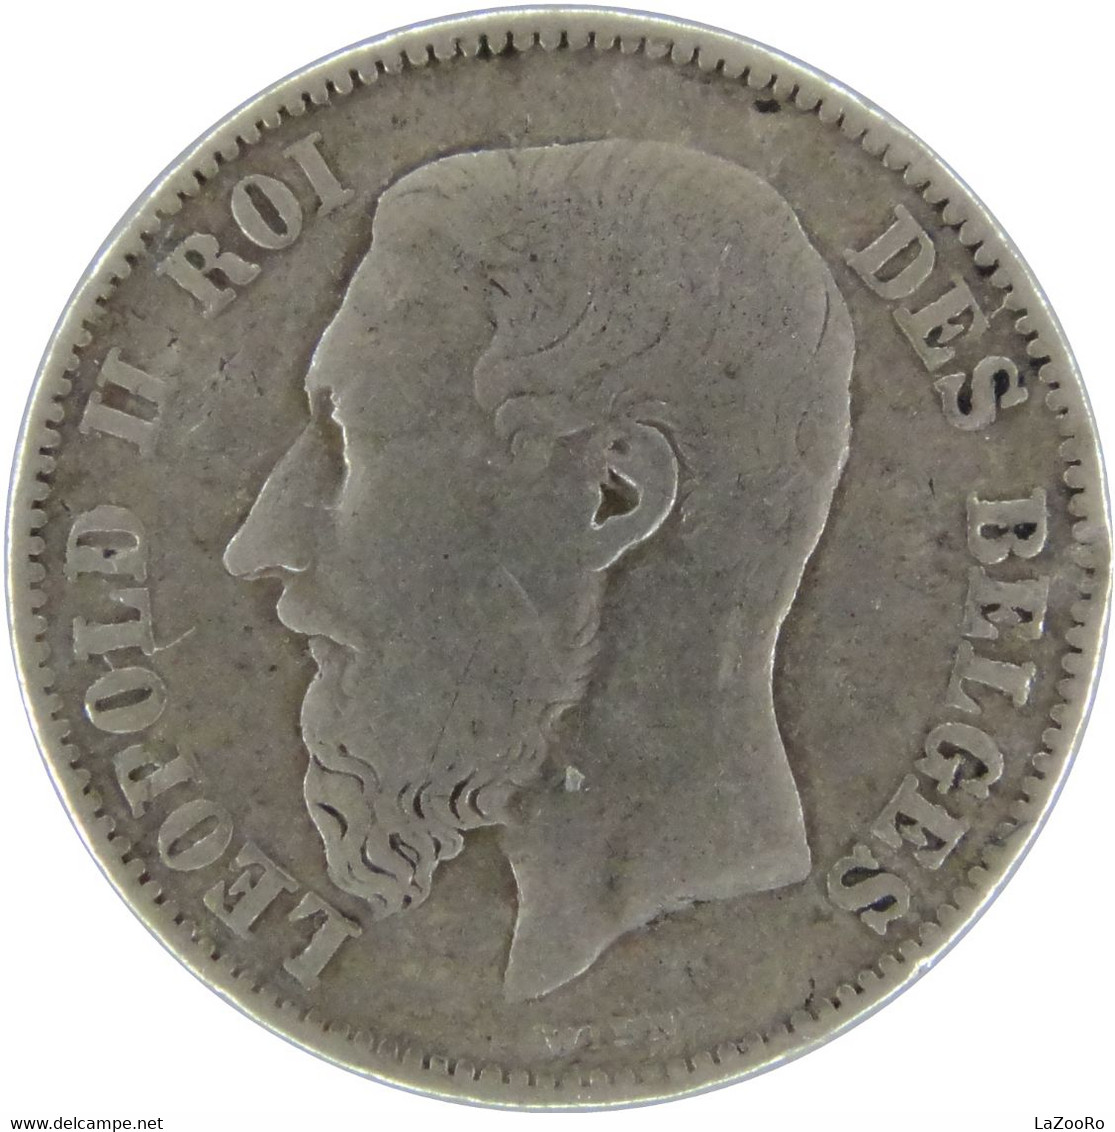 LaZooRo: Belgium 50 Centimes 1866 VF / XF - Silver - 50 Cent